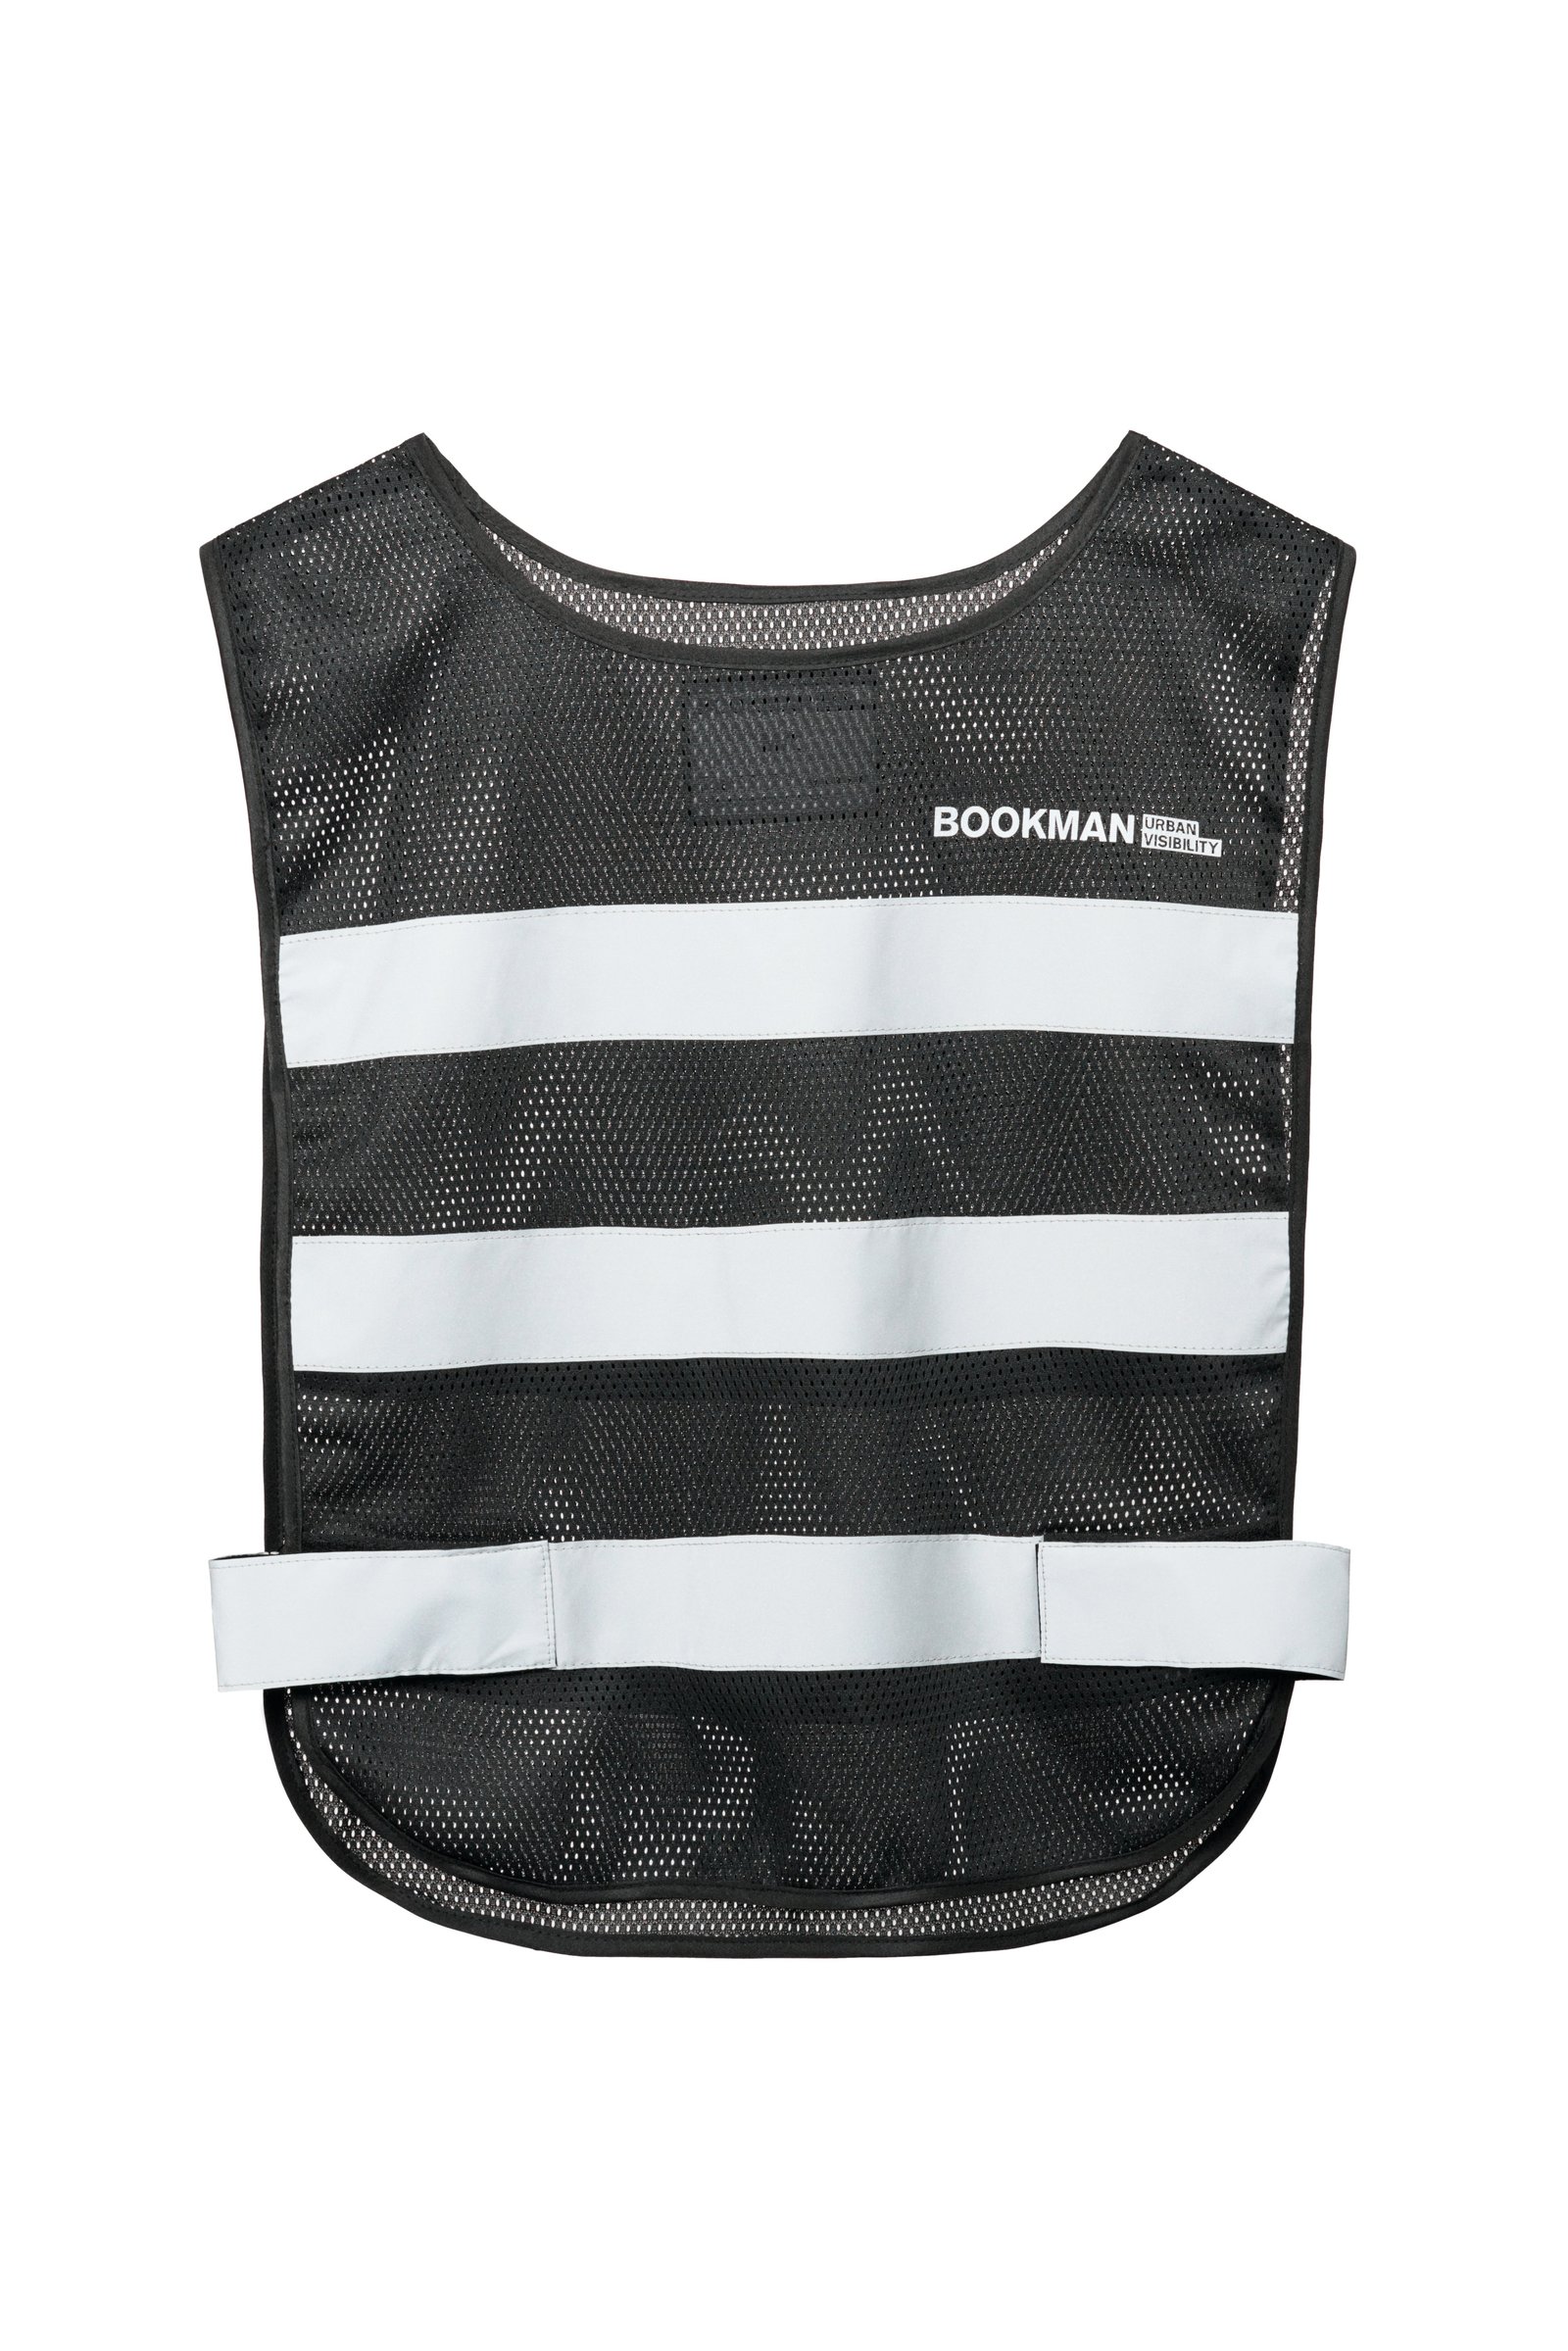 Bookman Urban Visibility Reflective Vest Black XS/S